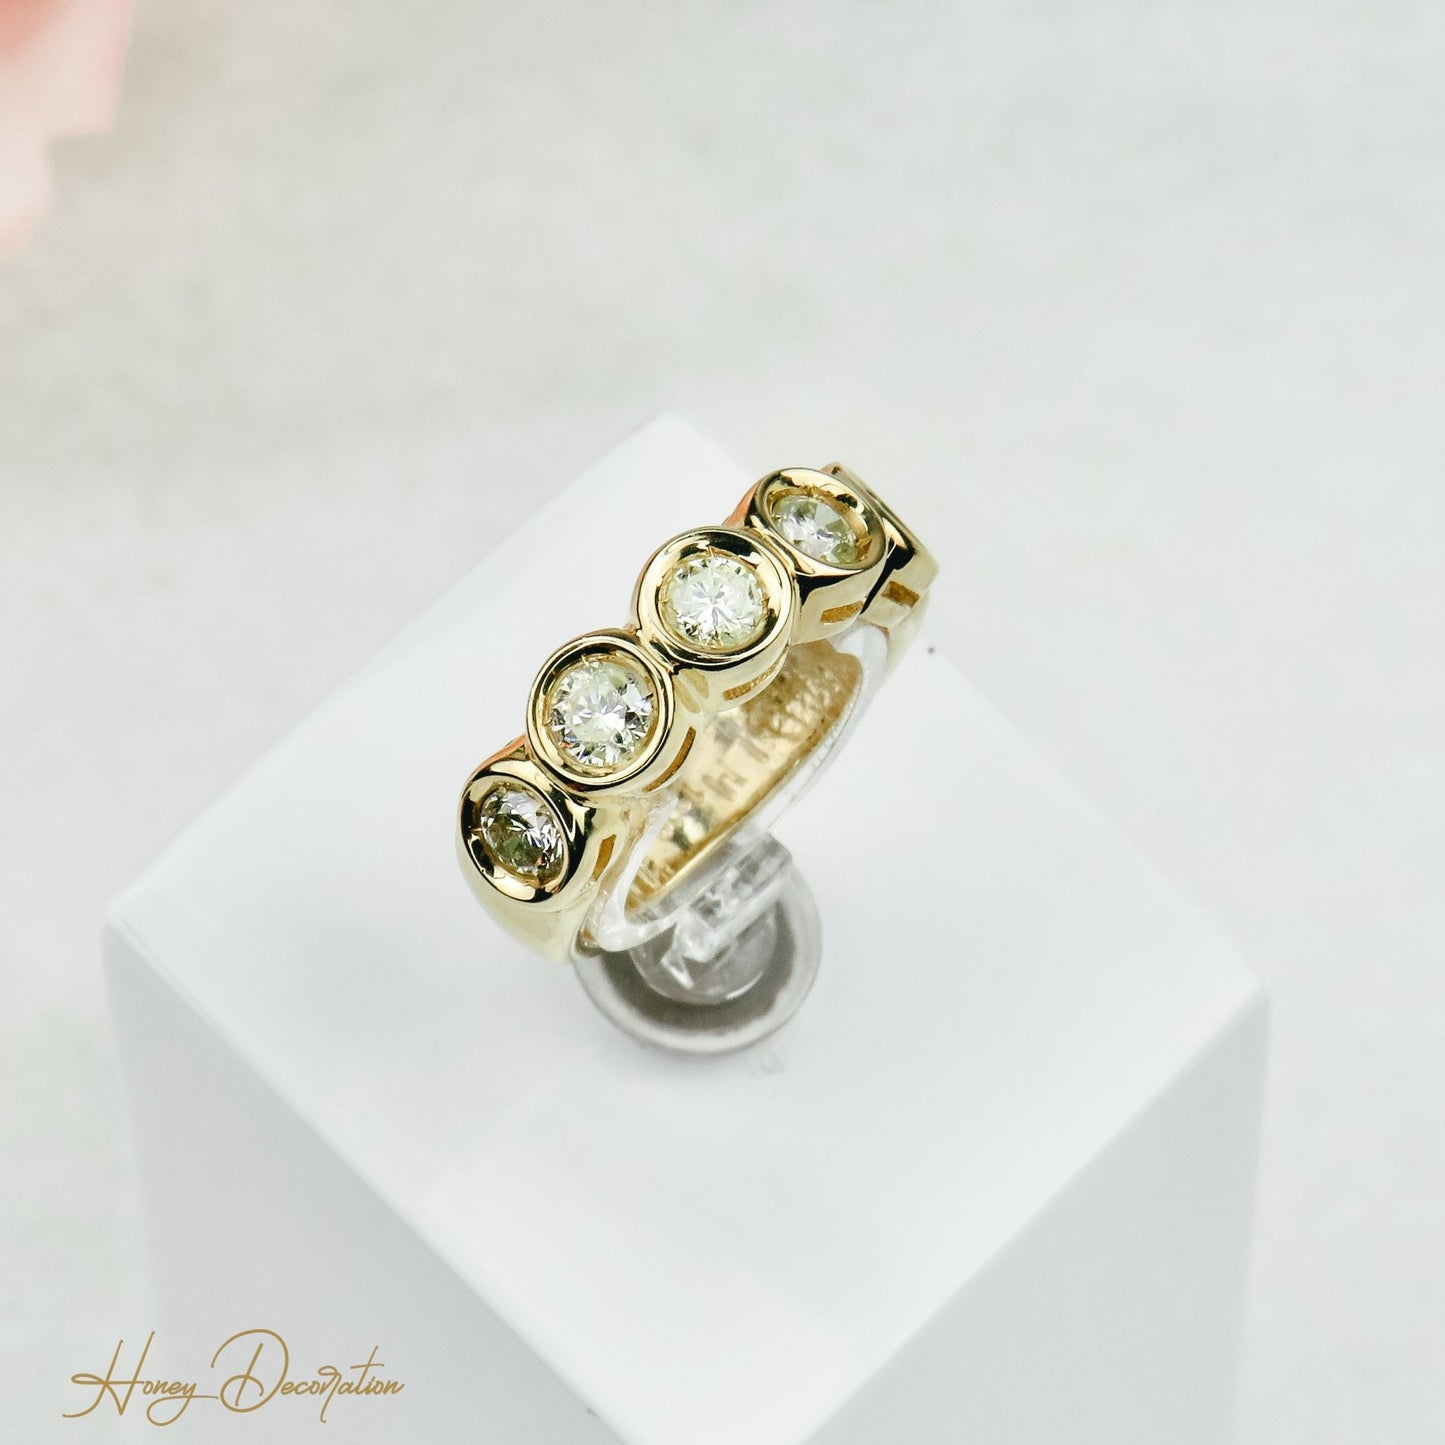 Edler Memory-Ring aus Gold besetzt mit Brillanten - Honey Decoration